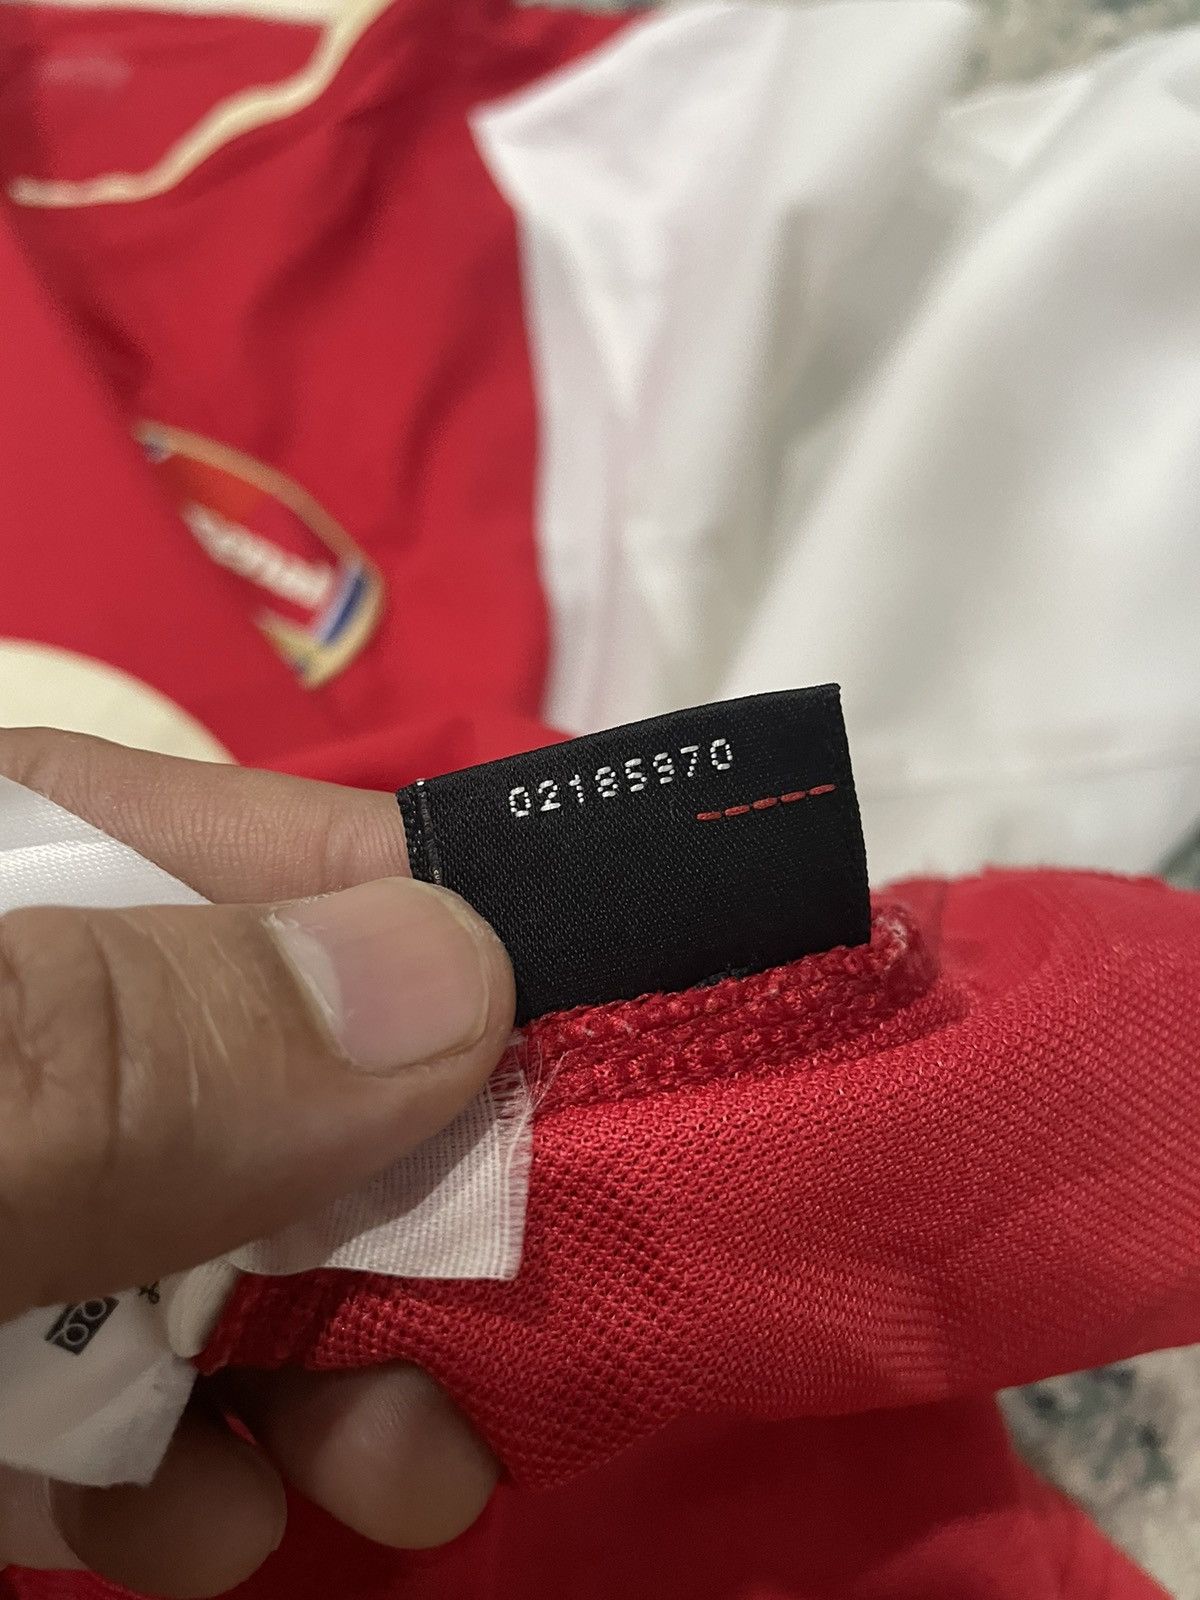 Arsenal 02/03 Vintage Jersey - 12